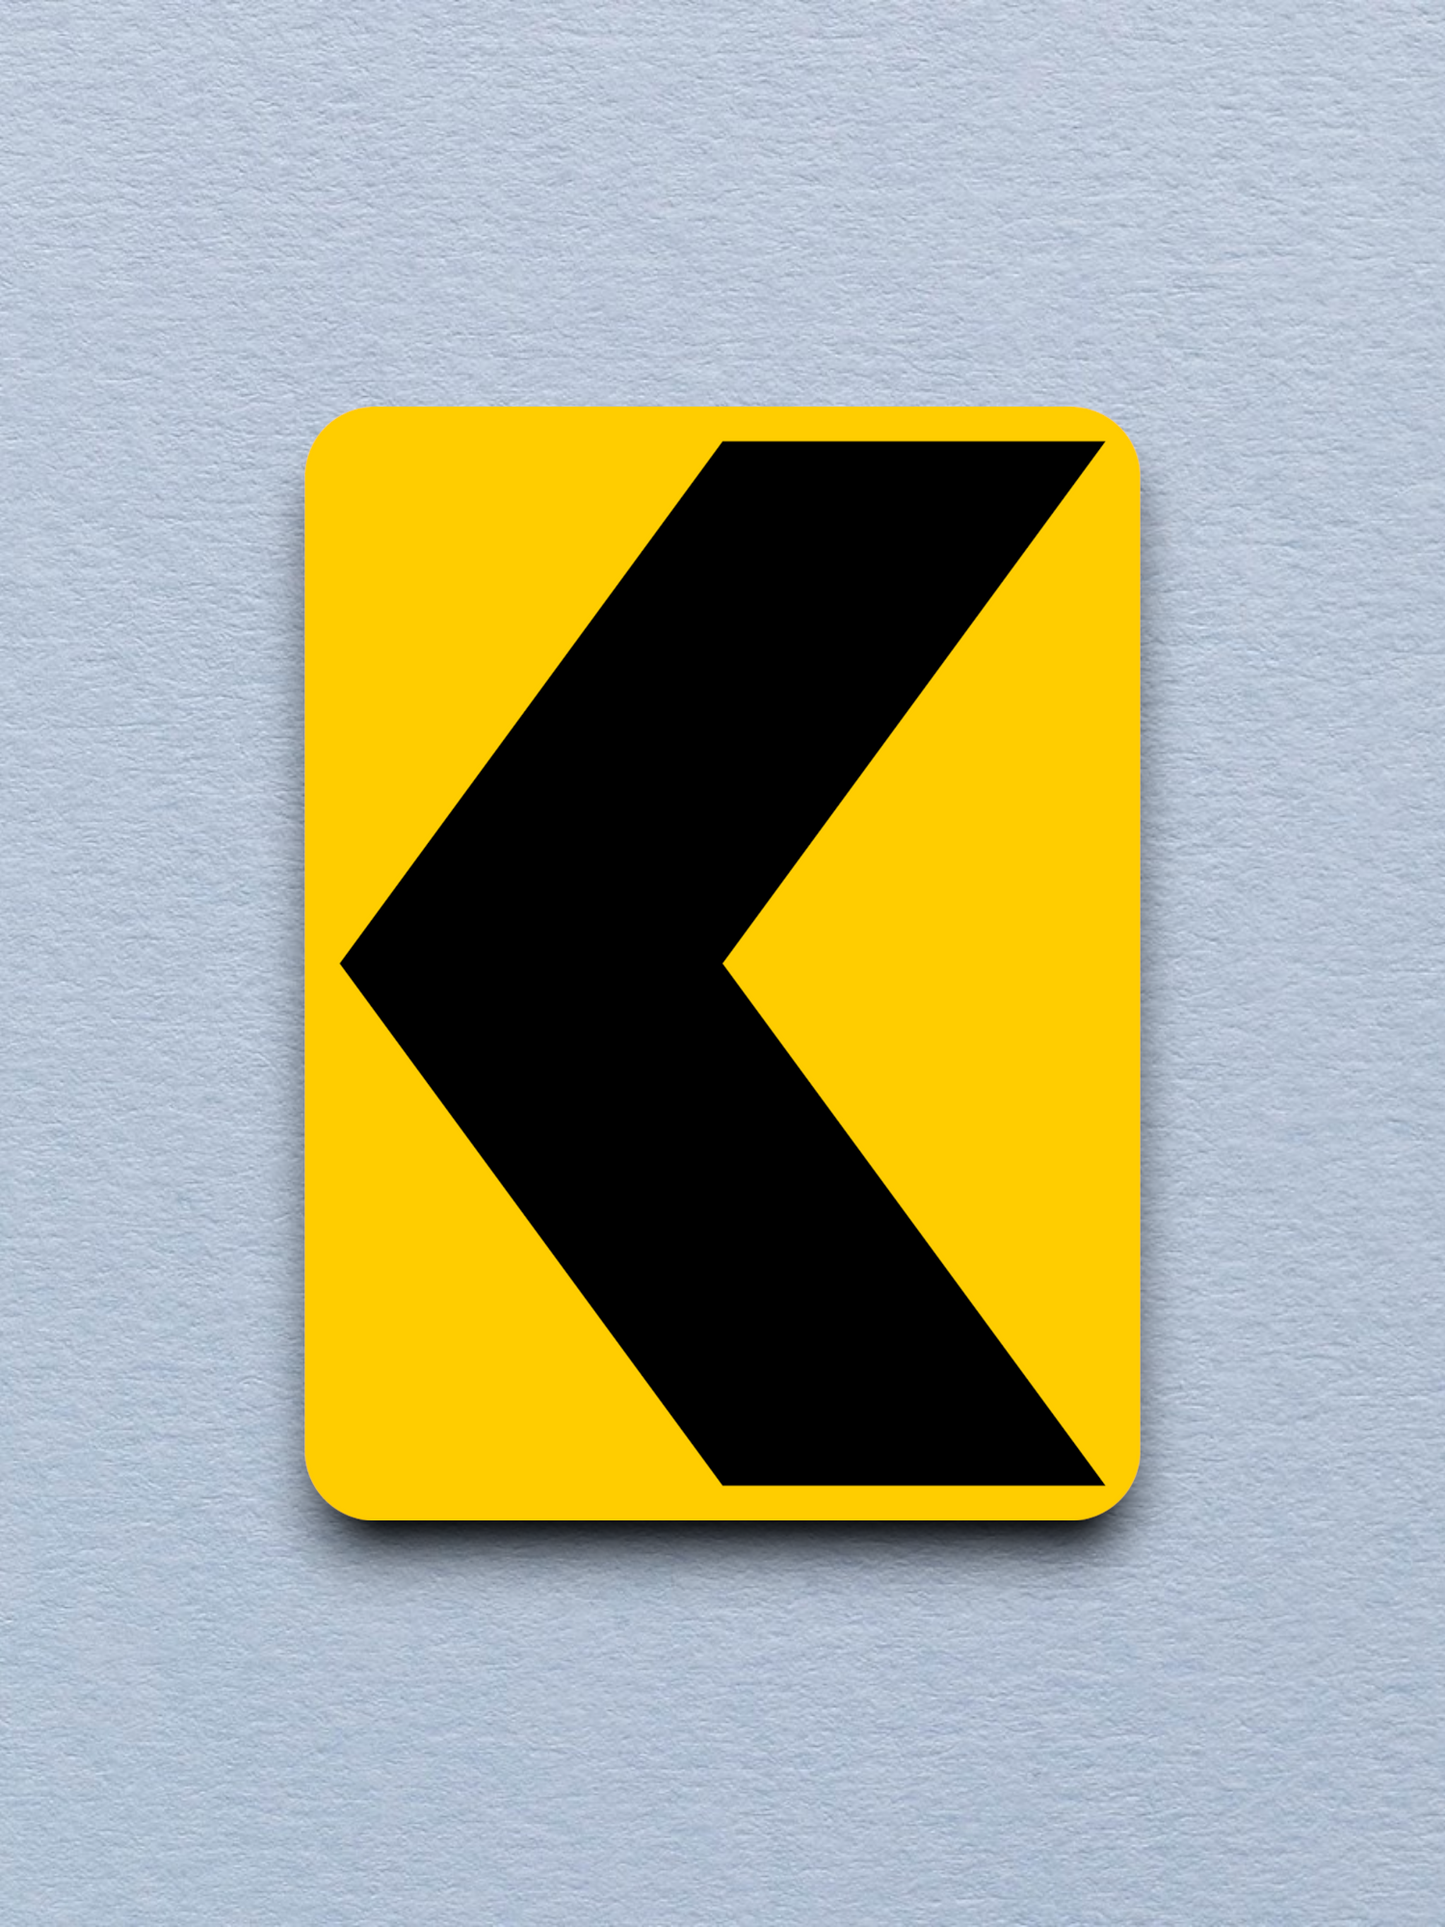 Chevron United States Road Sign Sticker